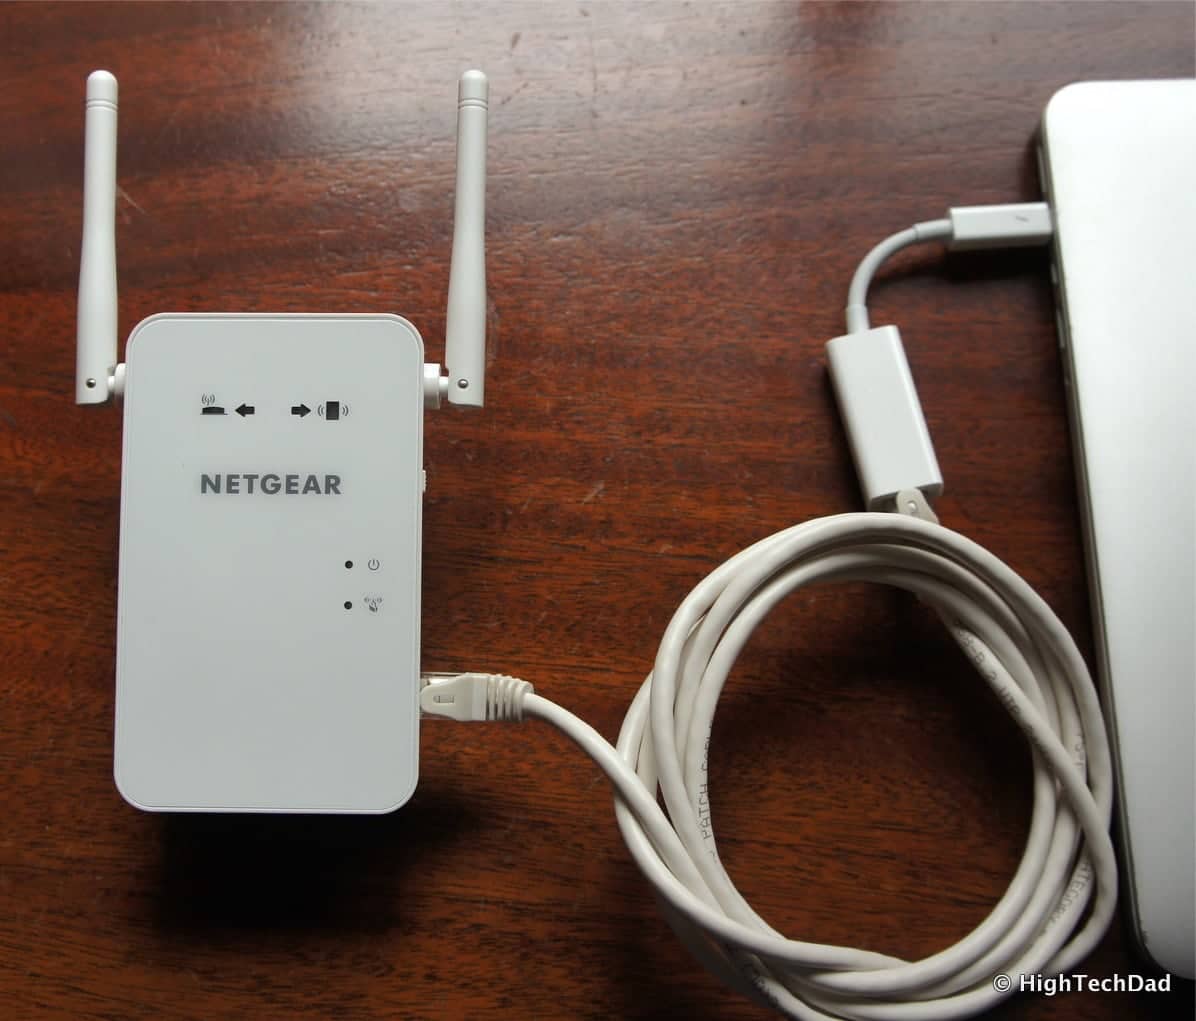 The NETGEAR AC750 WiFi Range Extender Solved My WiFi Problems